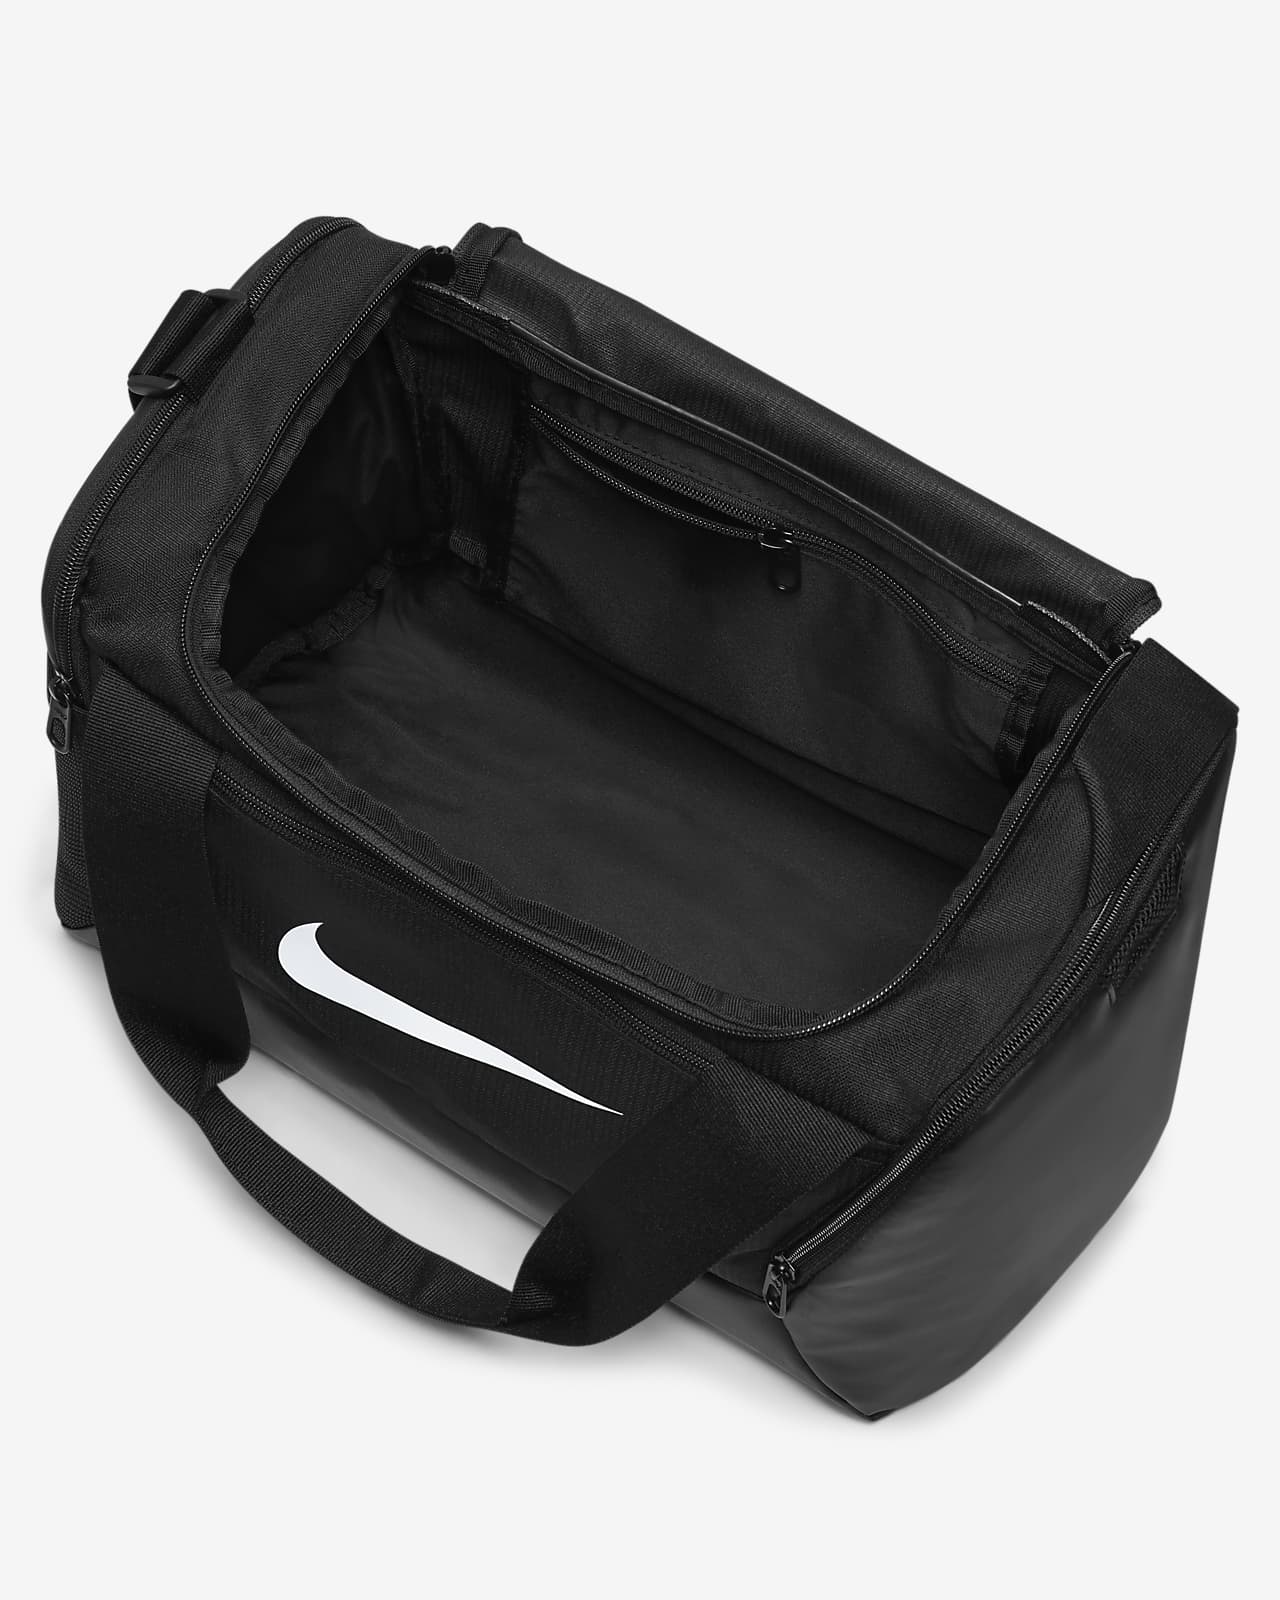 Nike Brasilia 9.5 - XS  Accessories Sports bags Nike